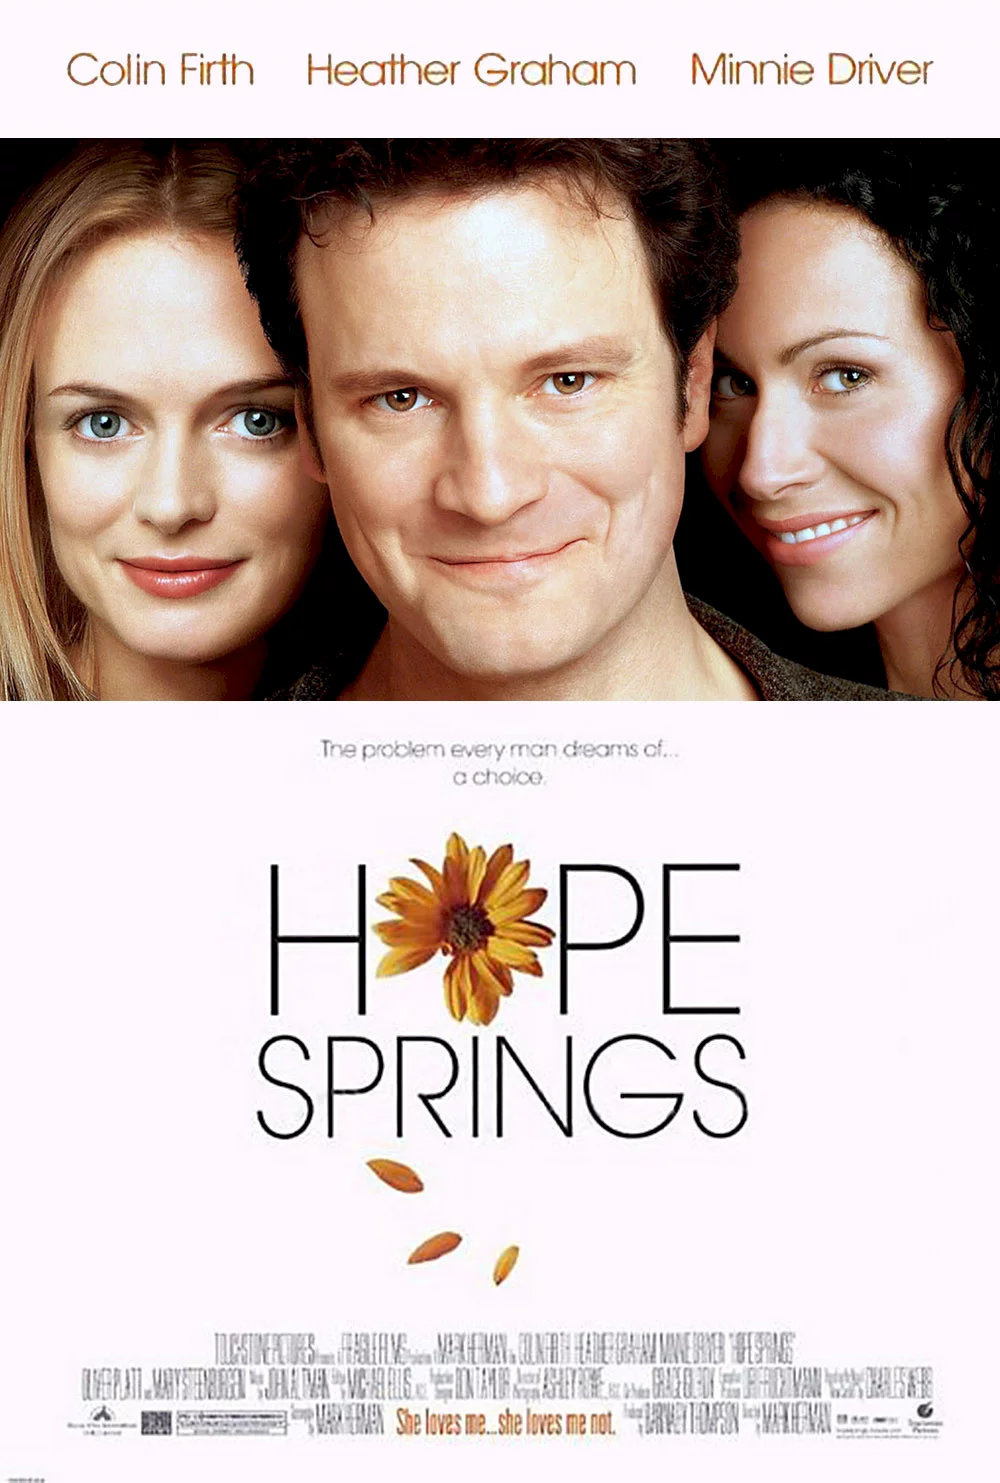 Photo du film : Hope springs